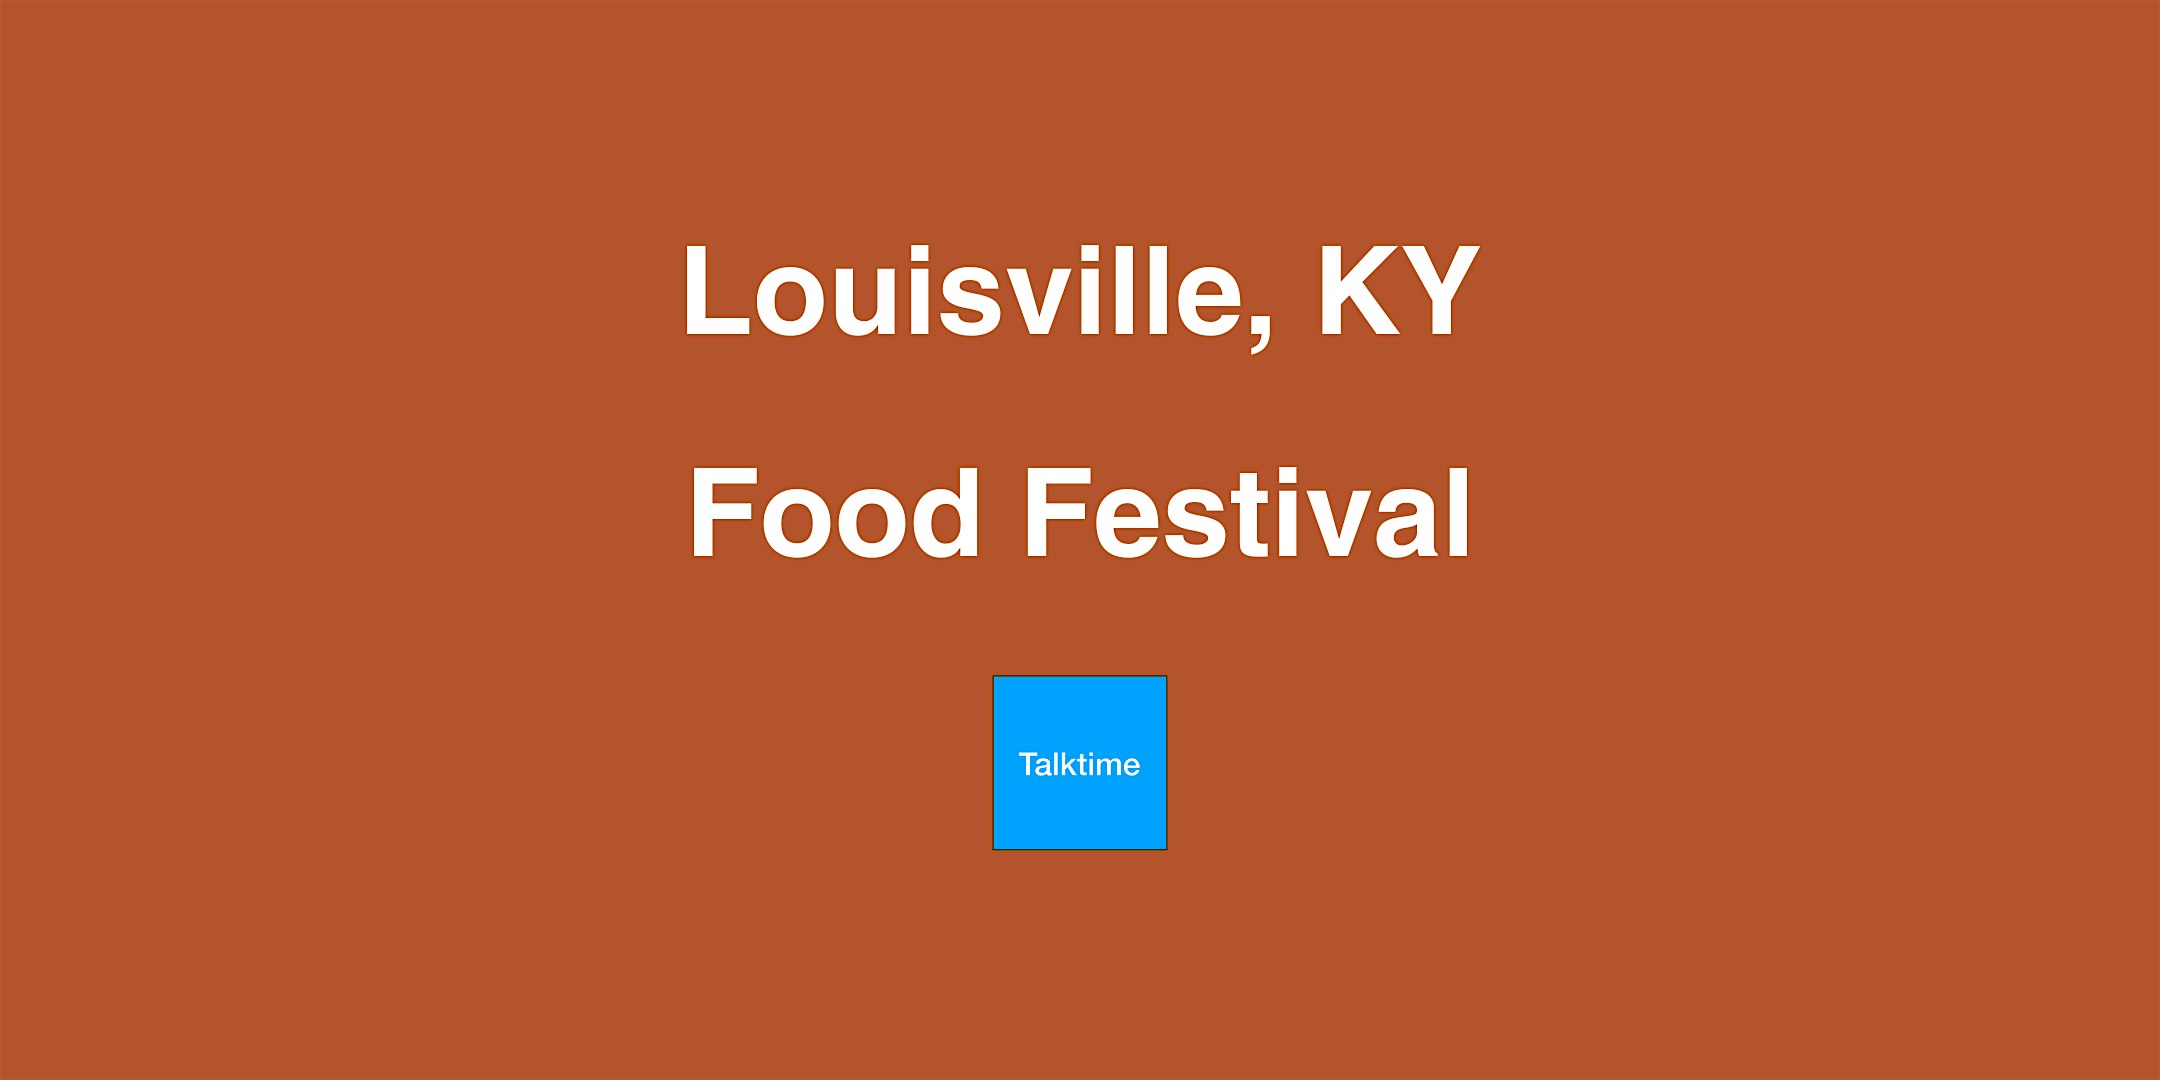 Food Festival - Louisville